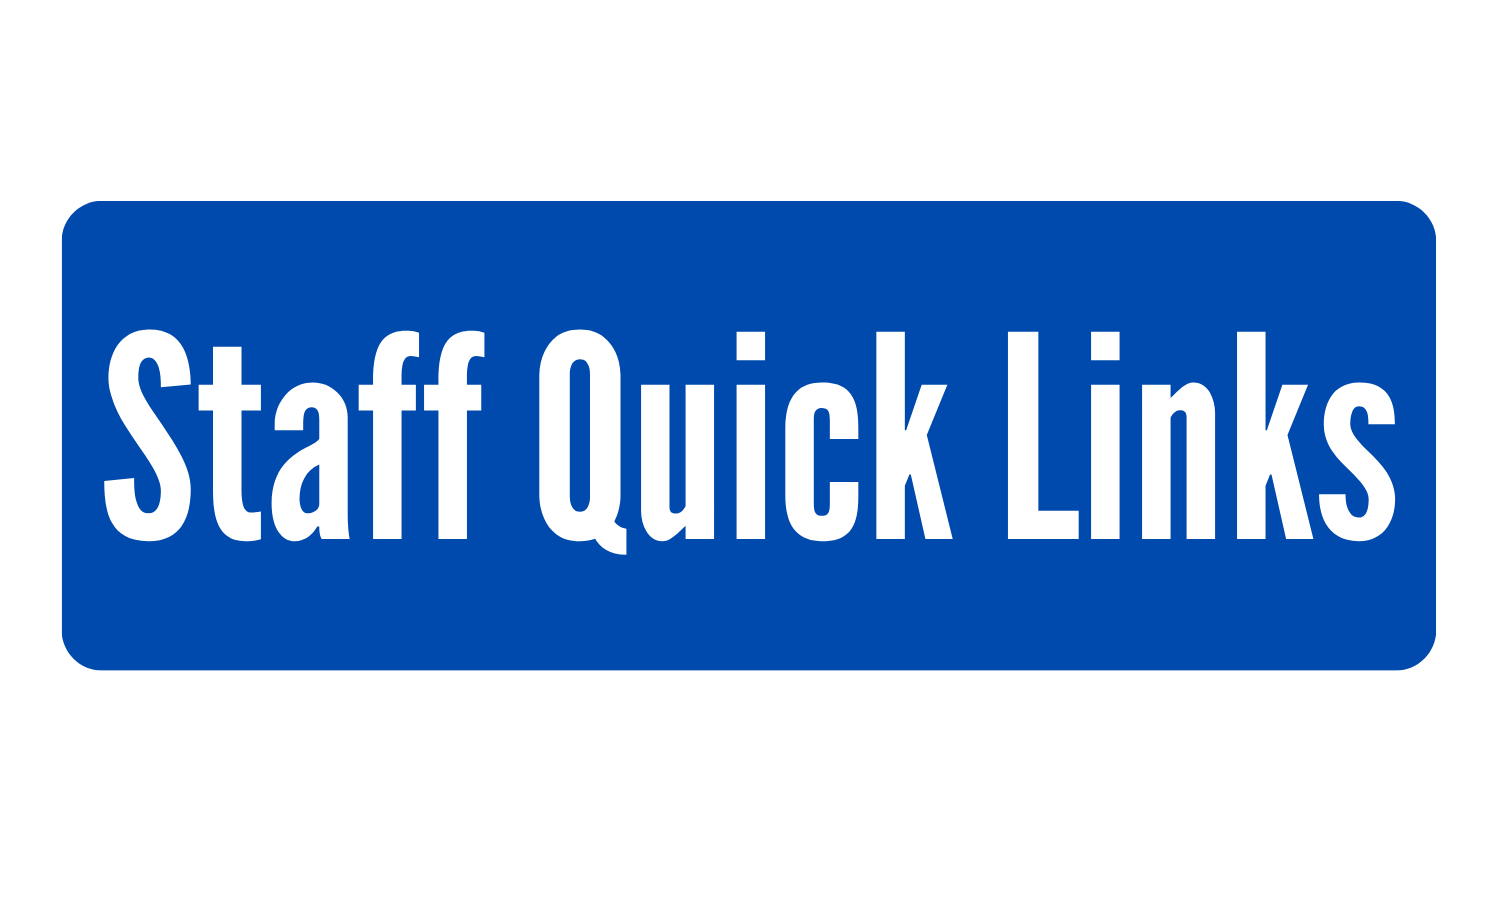 Staff quick links